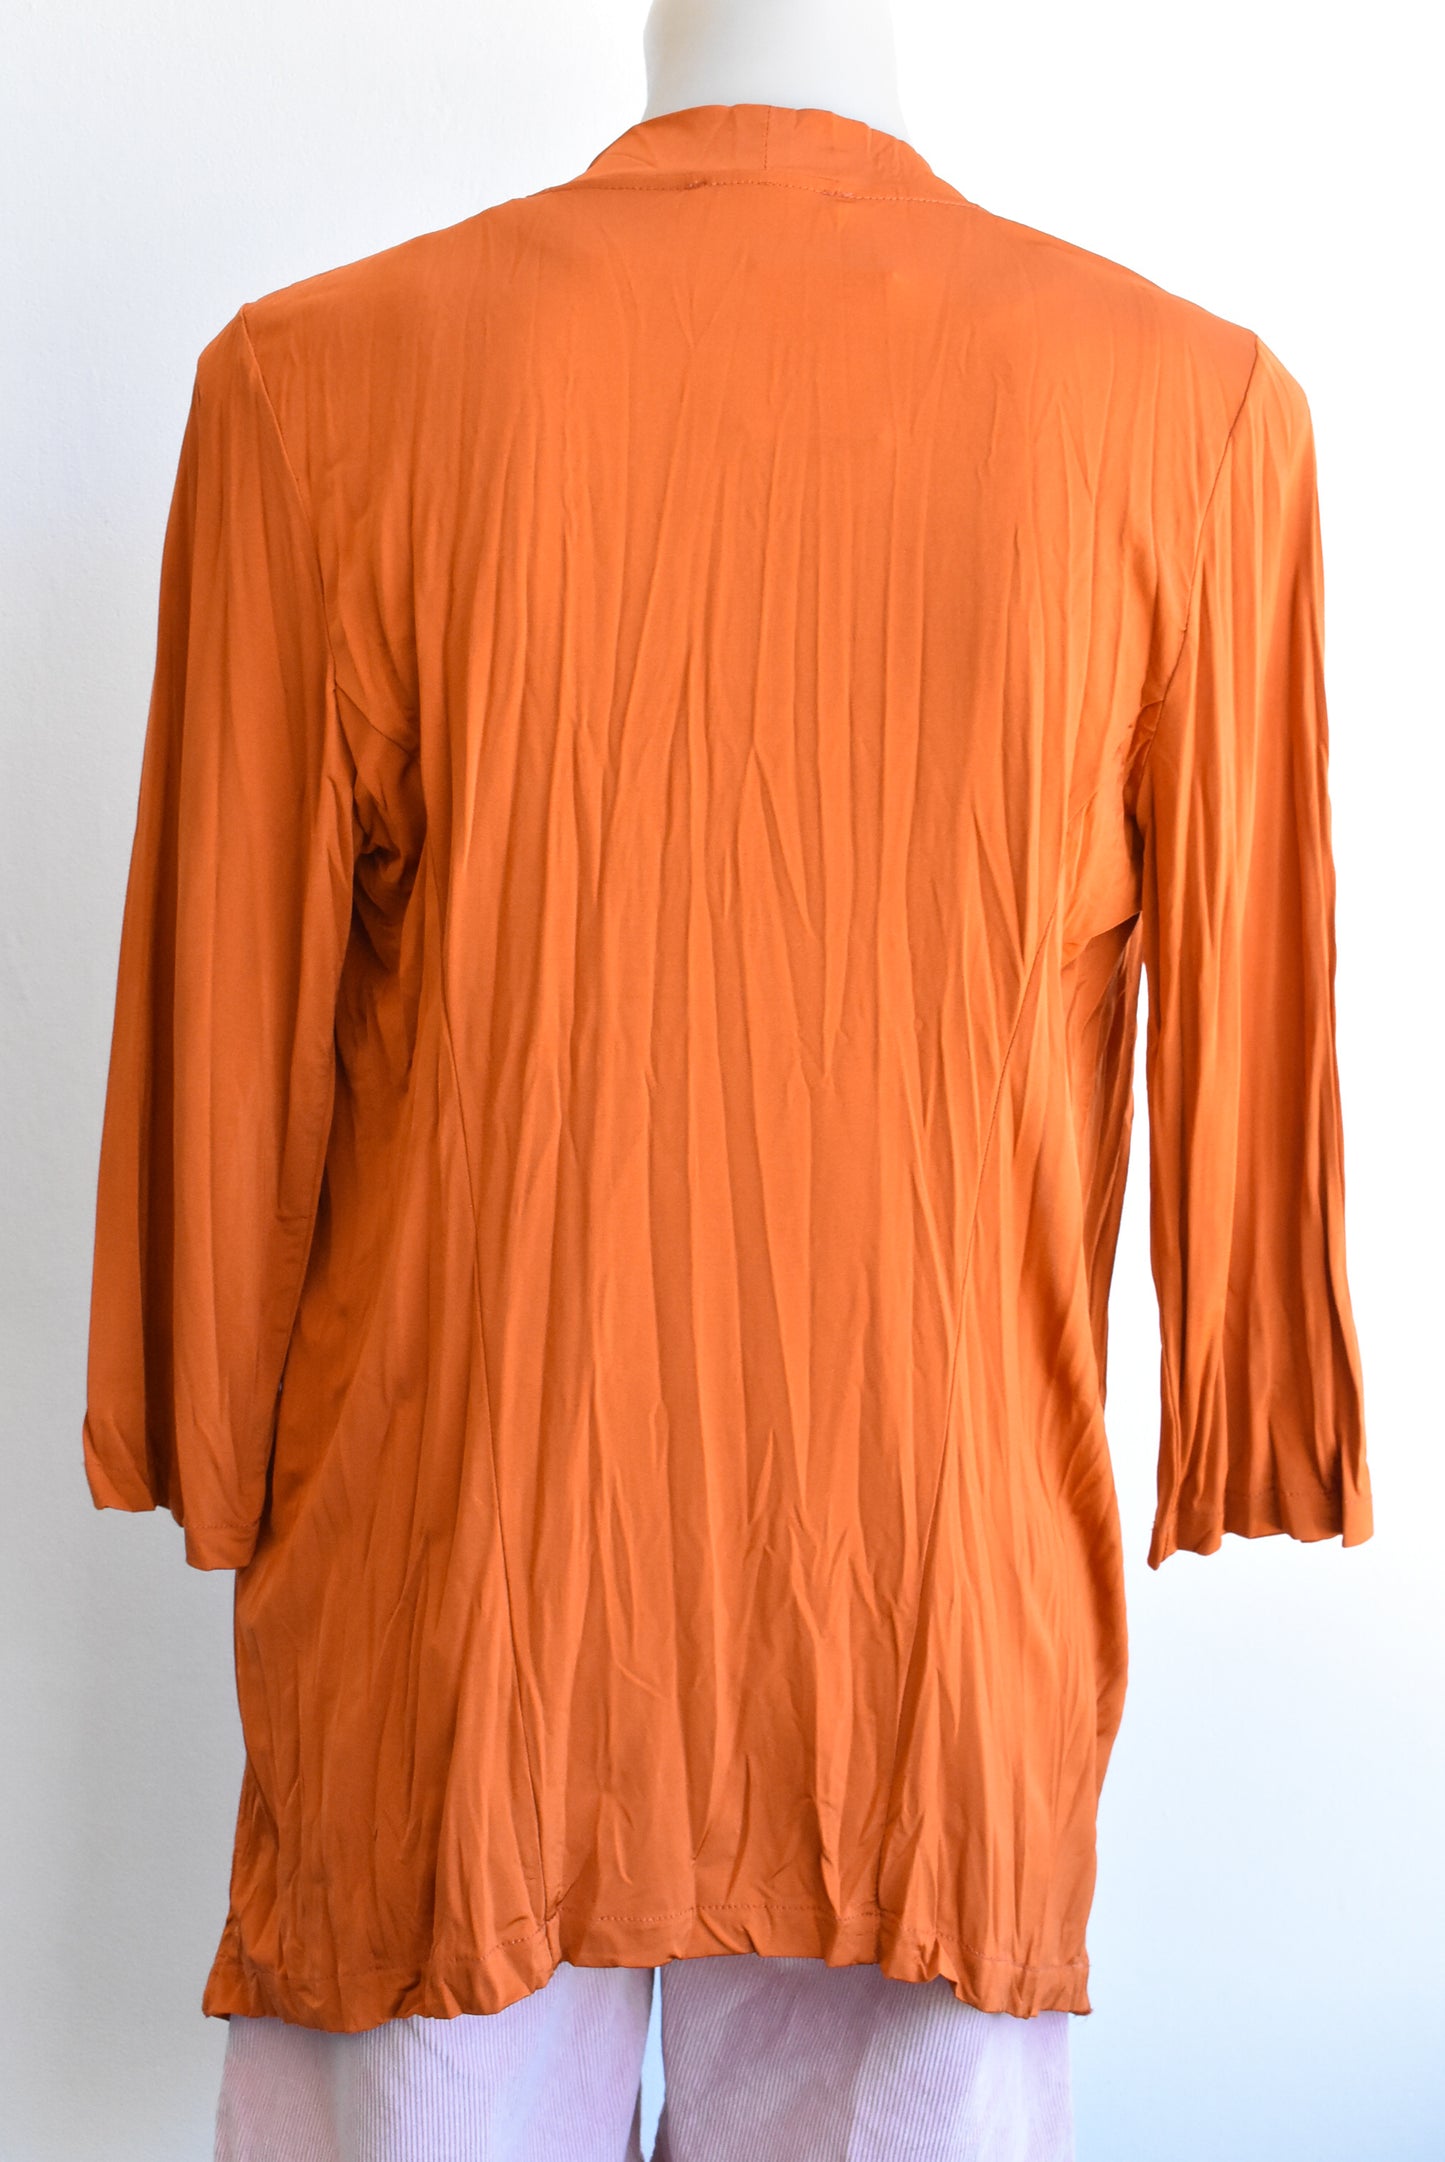 Vssp metallic orange 3/4 sleeve top, size 12